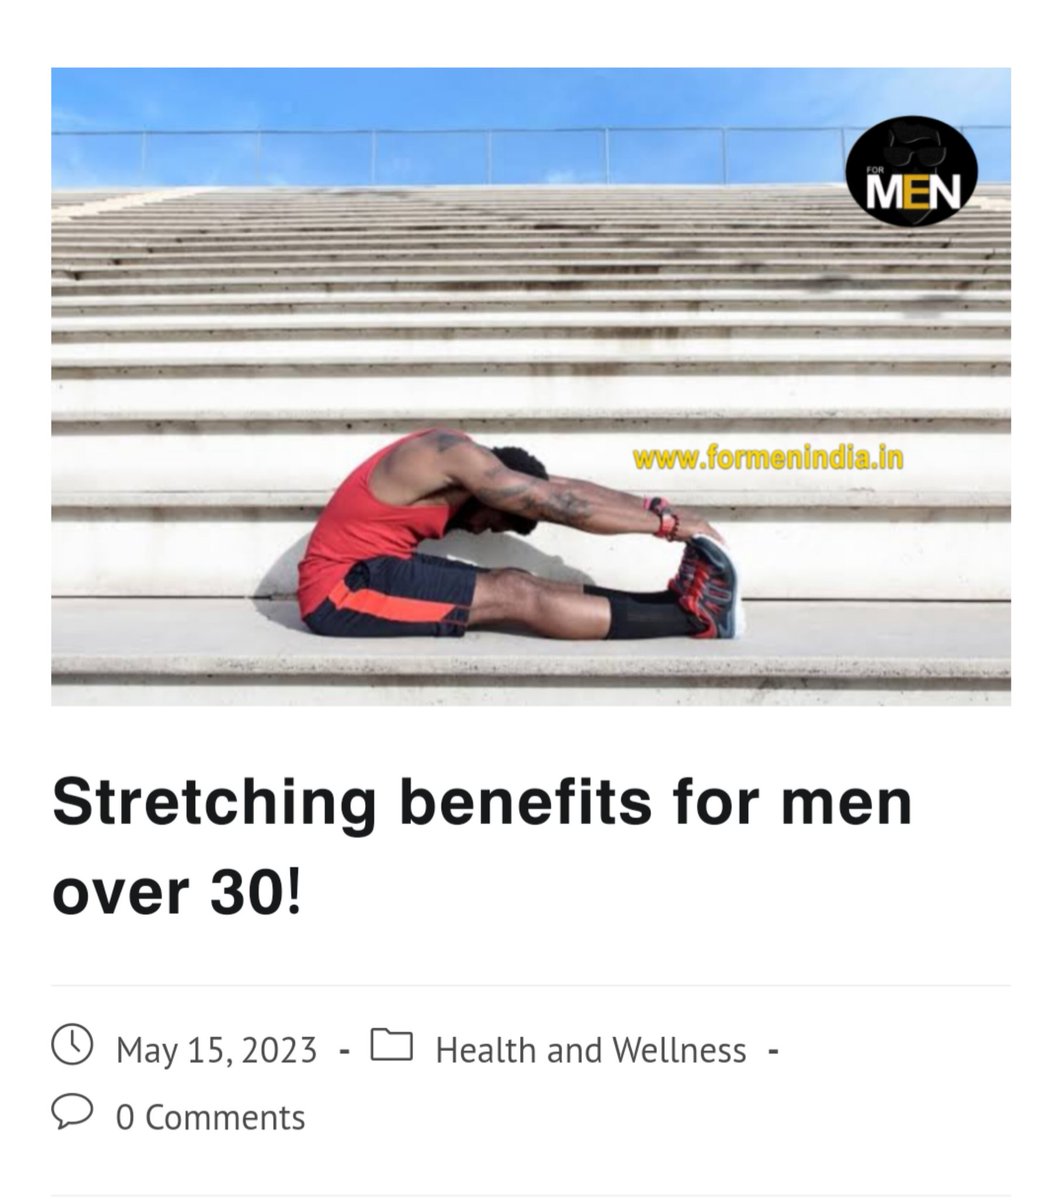 𝗦𝘁𝗿𝗲𝘁𝗰𝗵𝗶𝗻𝗴 𝗯𝗲𝗻𝗲𝗳𝗶𝘁𝘀 𝗳𝗼𝗿 𝗺𝗲𝗻 𝗼𝘃𝗲𝗿 𝟯𝟬!

#formenindia #menmattertoo #MenAreHuman #mentoo #india #fitness #health 

Read this: formenindia.in

#Men #fitness #Health #MensHealth